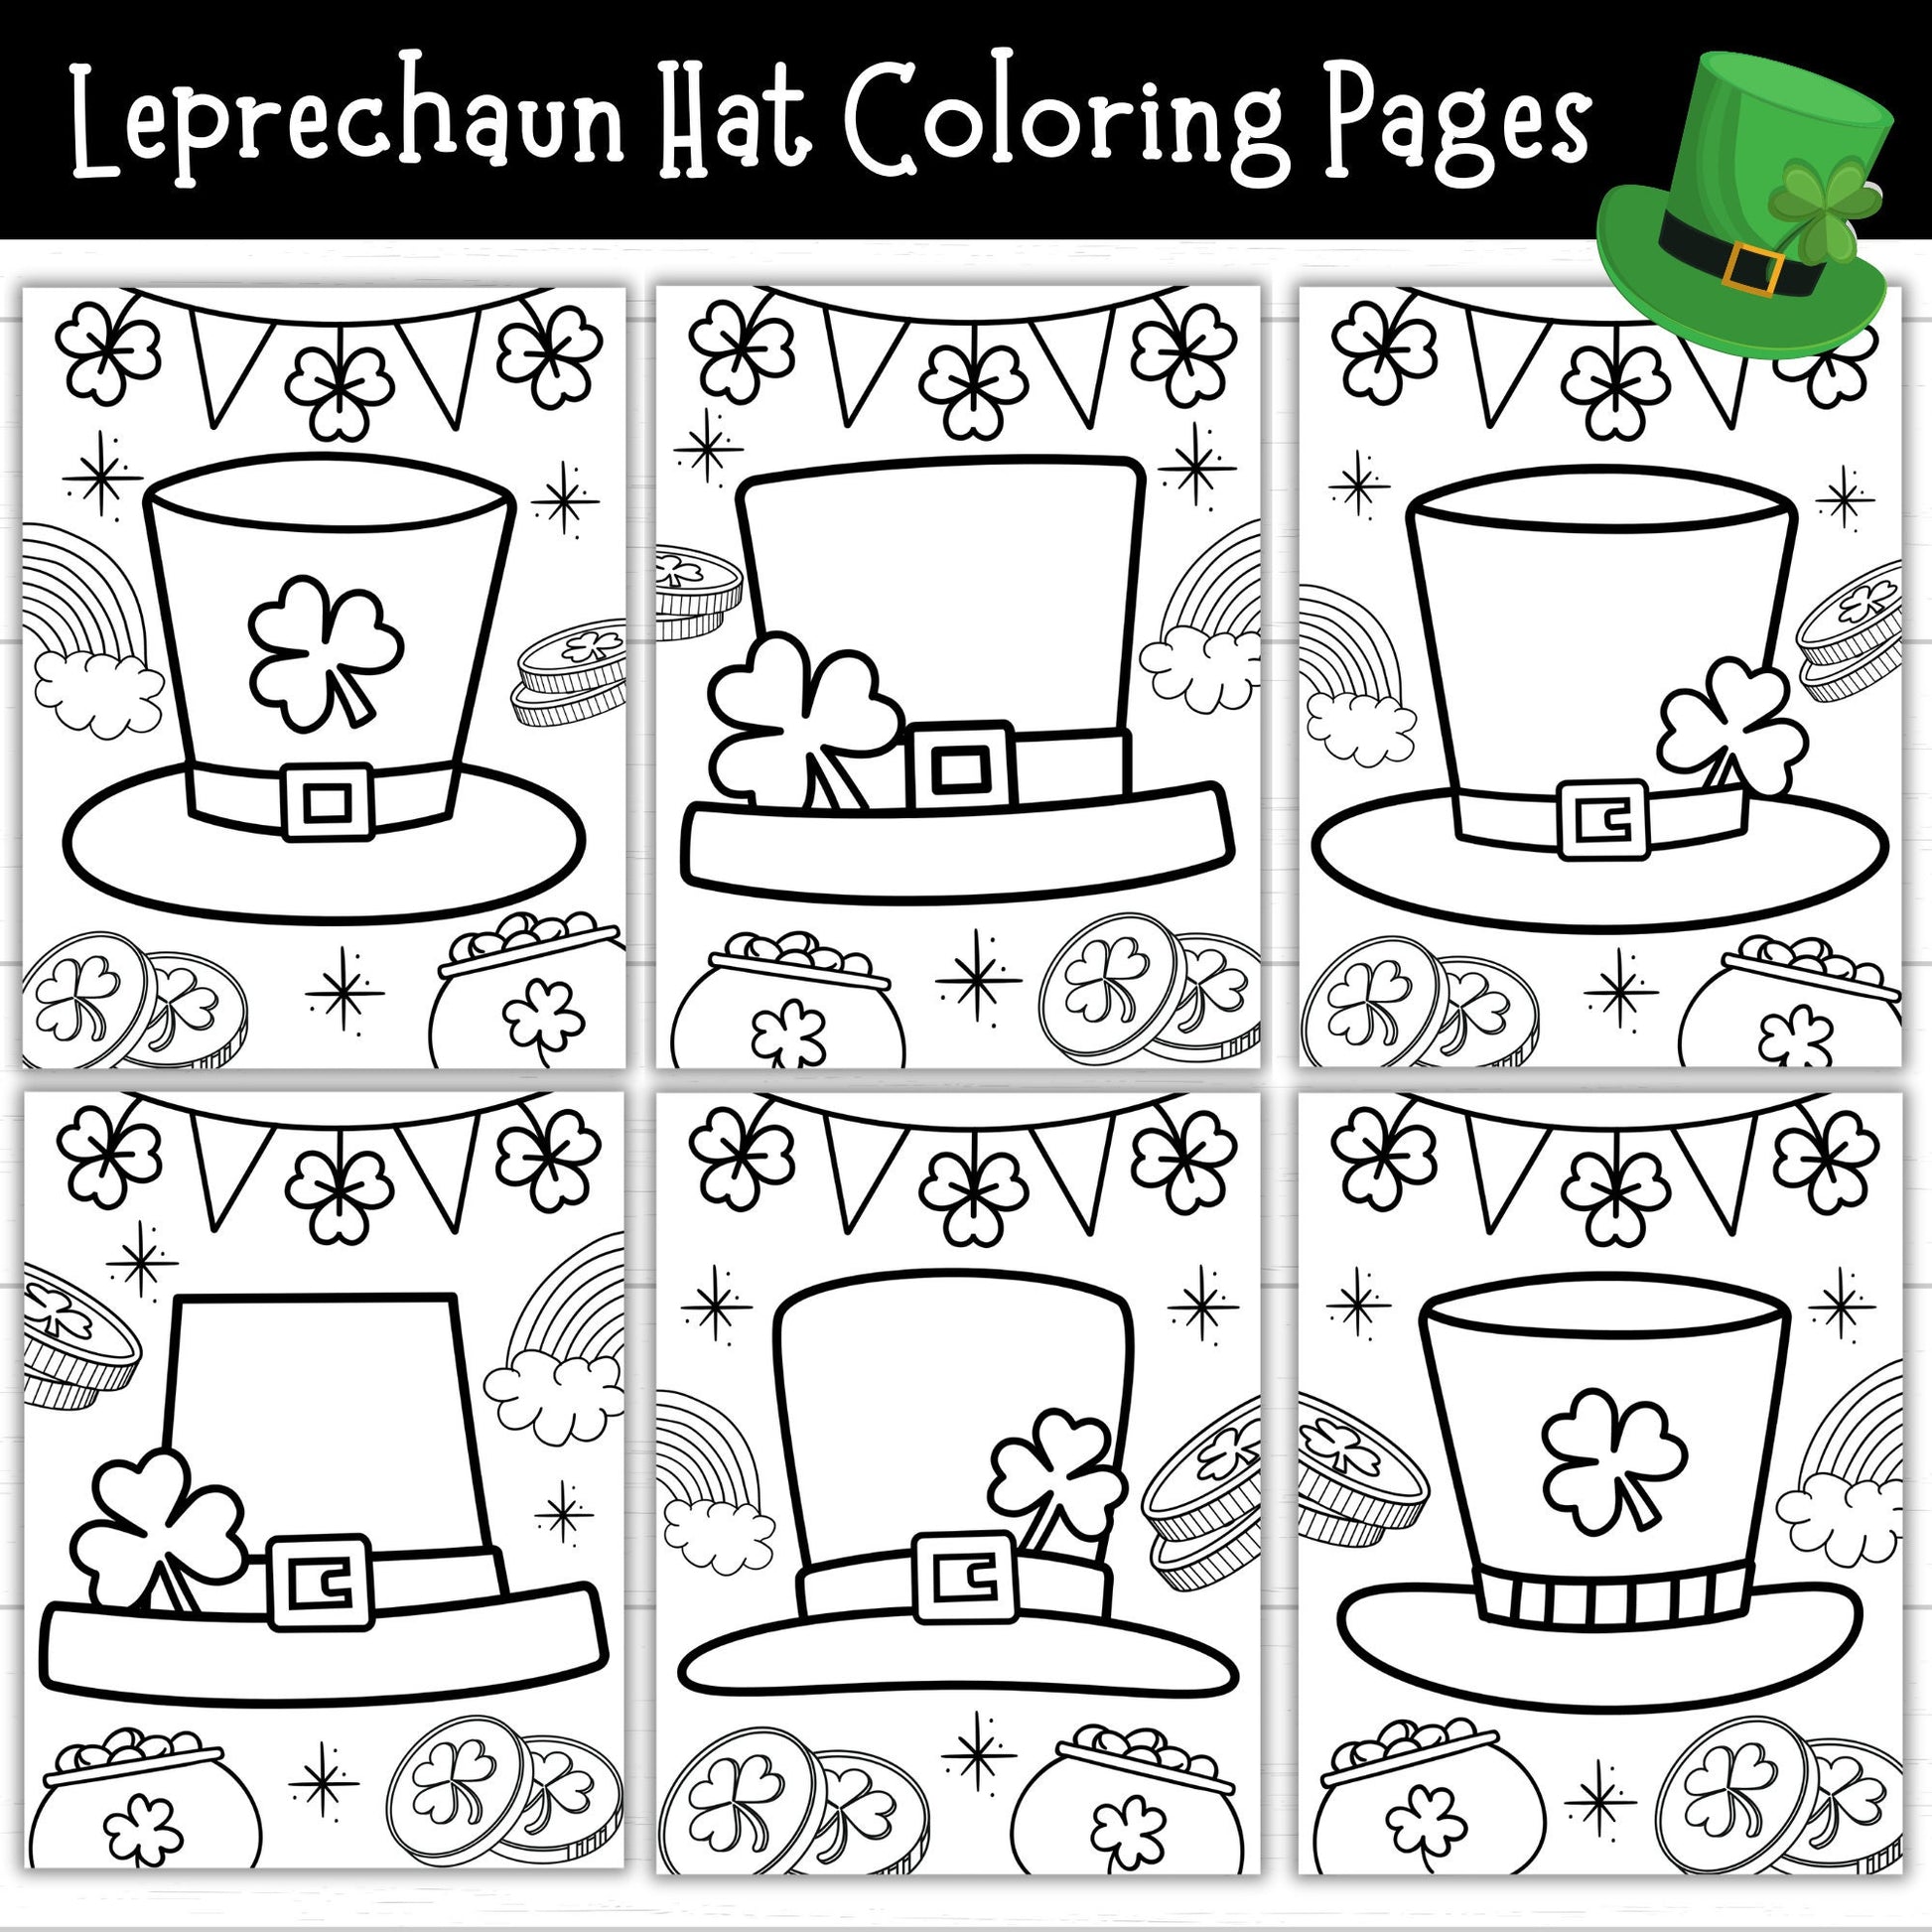 Leprechaun Hat Coloring Pages, Leprechaun Hat Printables, Printable St. Patrick's Day Coloring Pages, Leprechaun Activities and Printables